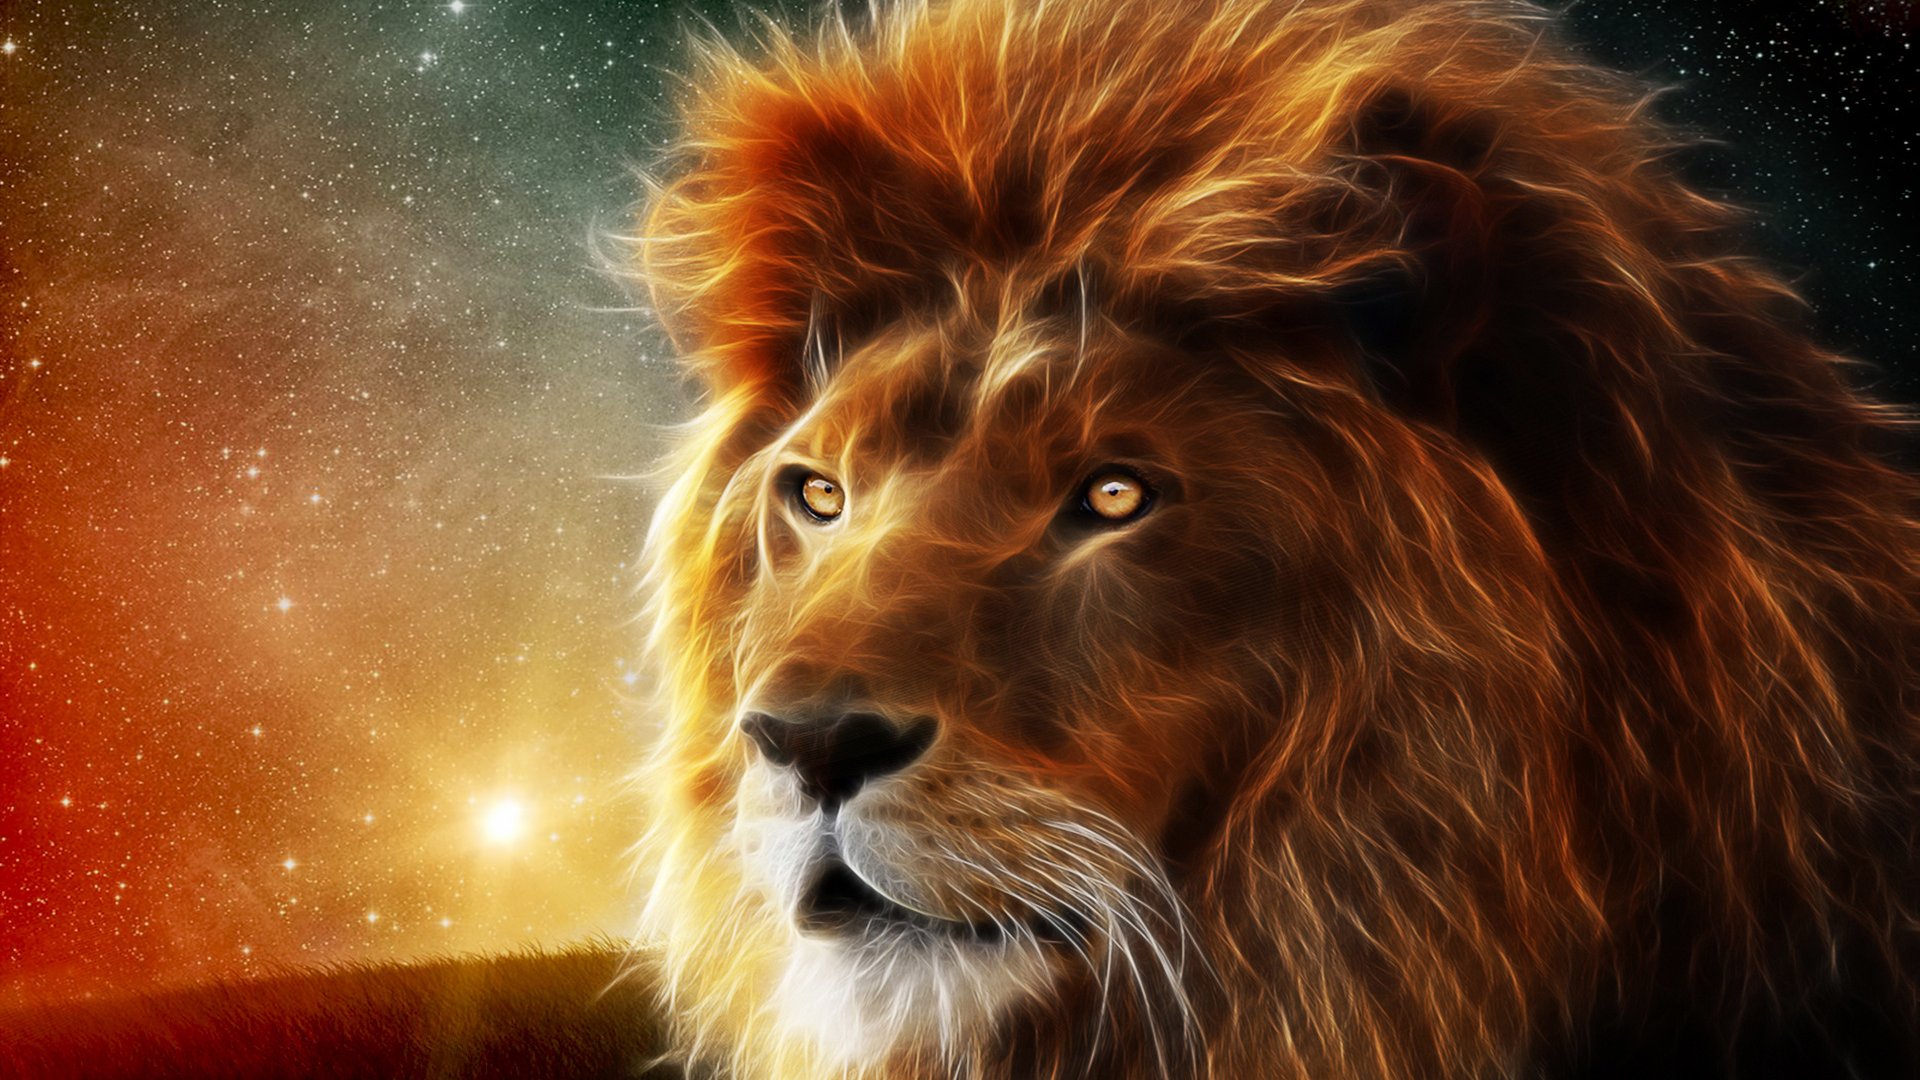 Wallpaper Digital artwork of lion animal